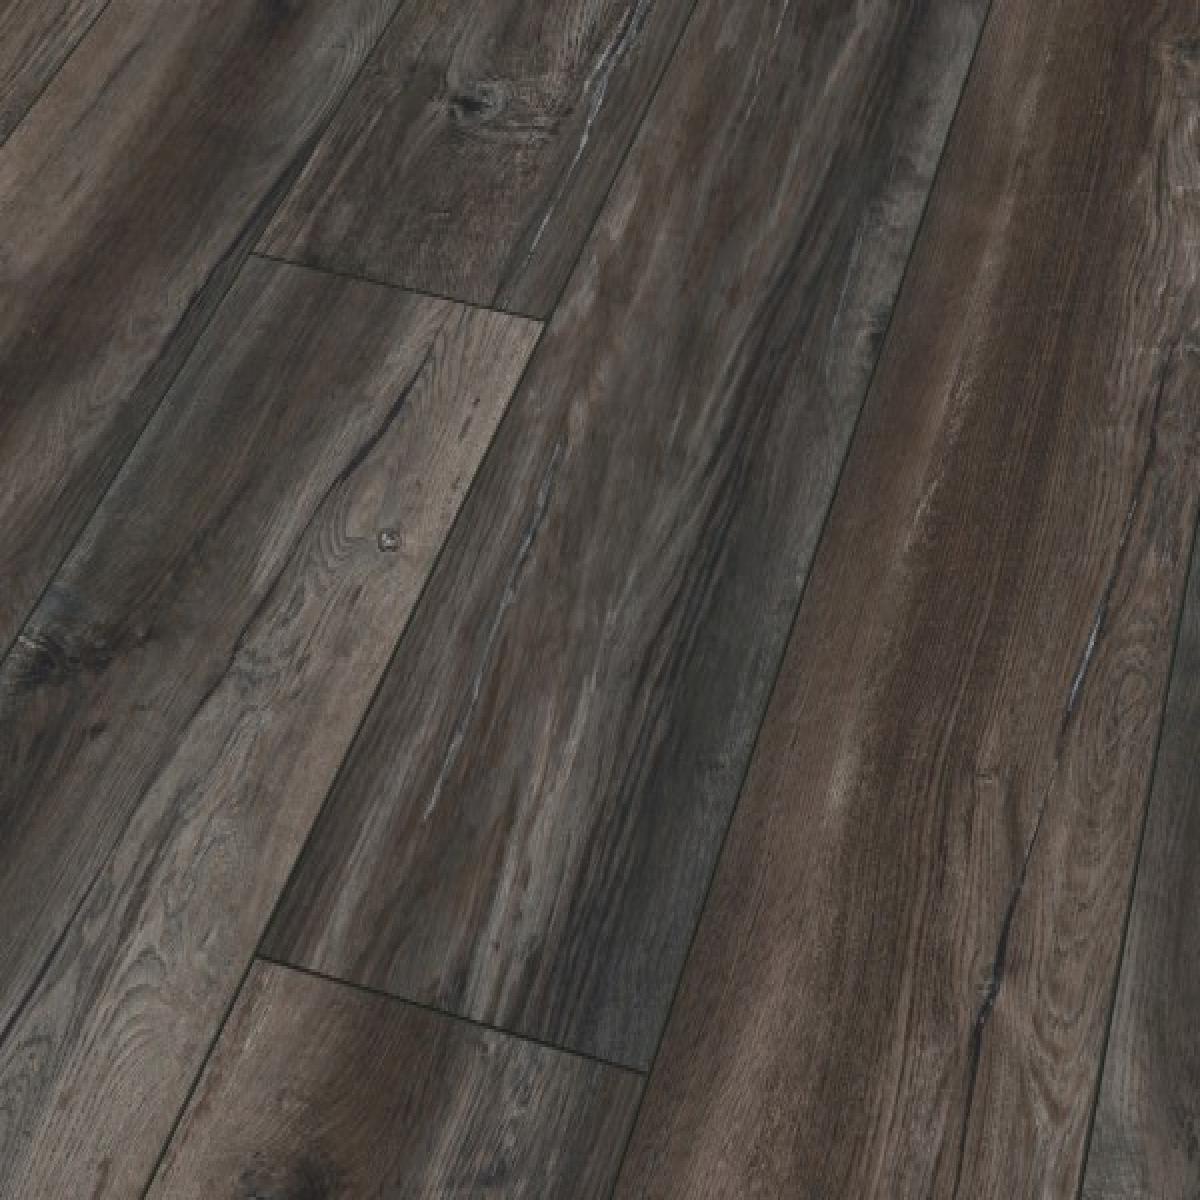 Harbour Oak Dark Laminate Flooring, Dark Oak Laminate Flooring 12mm